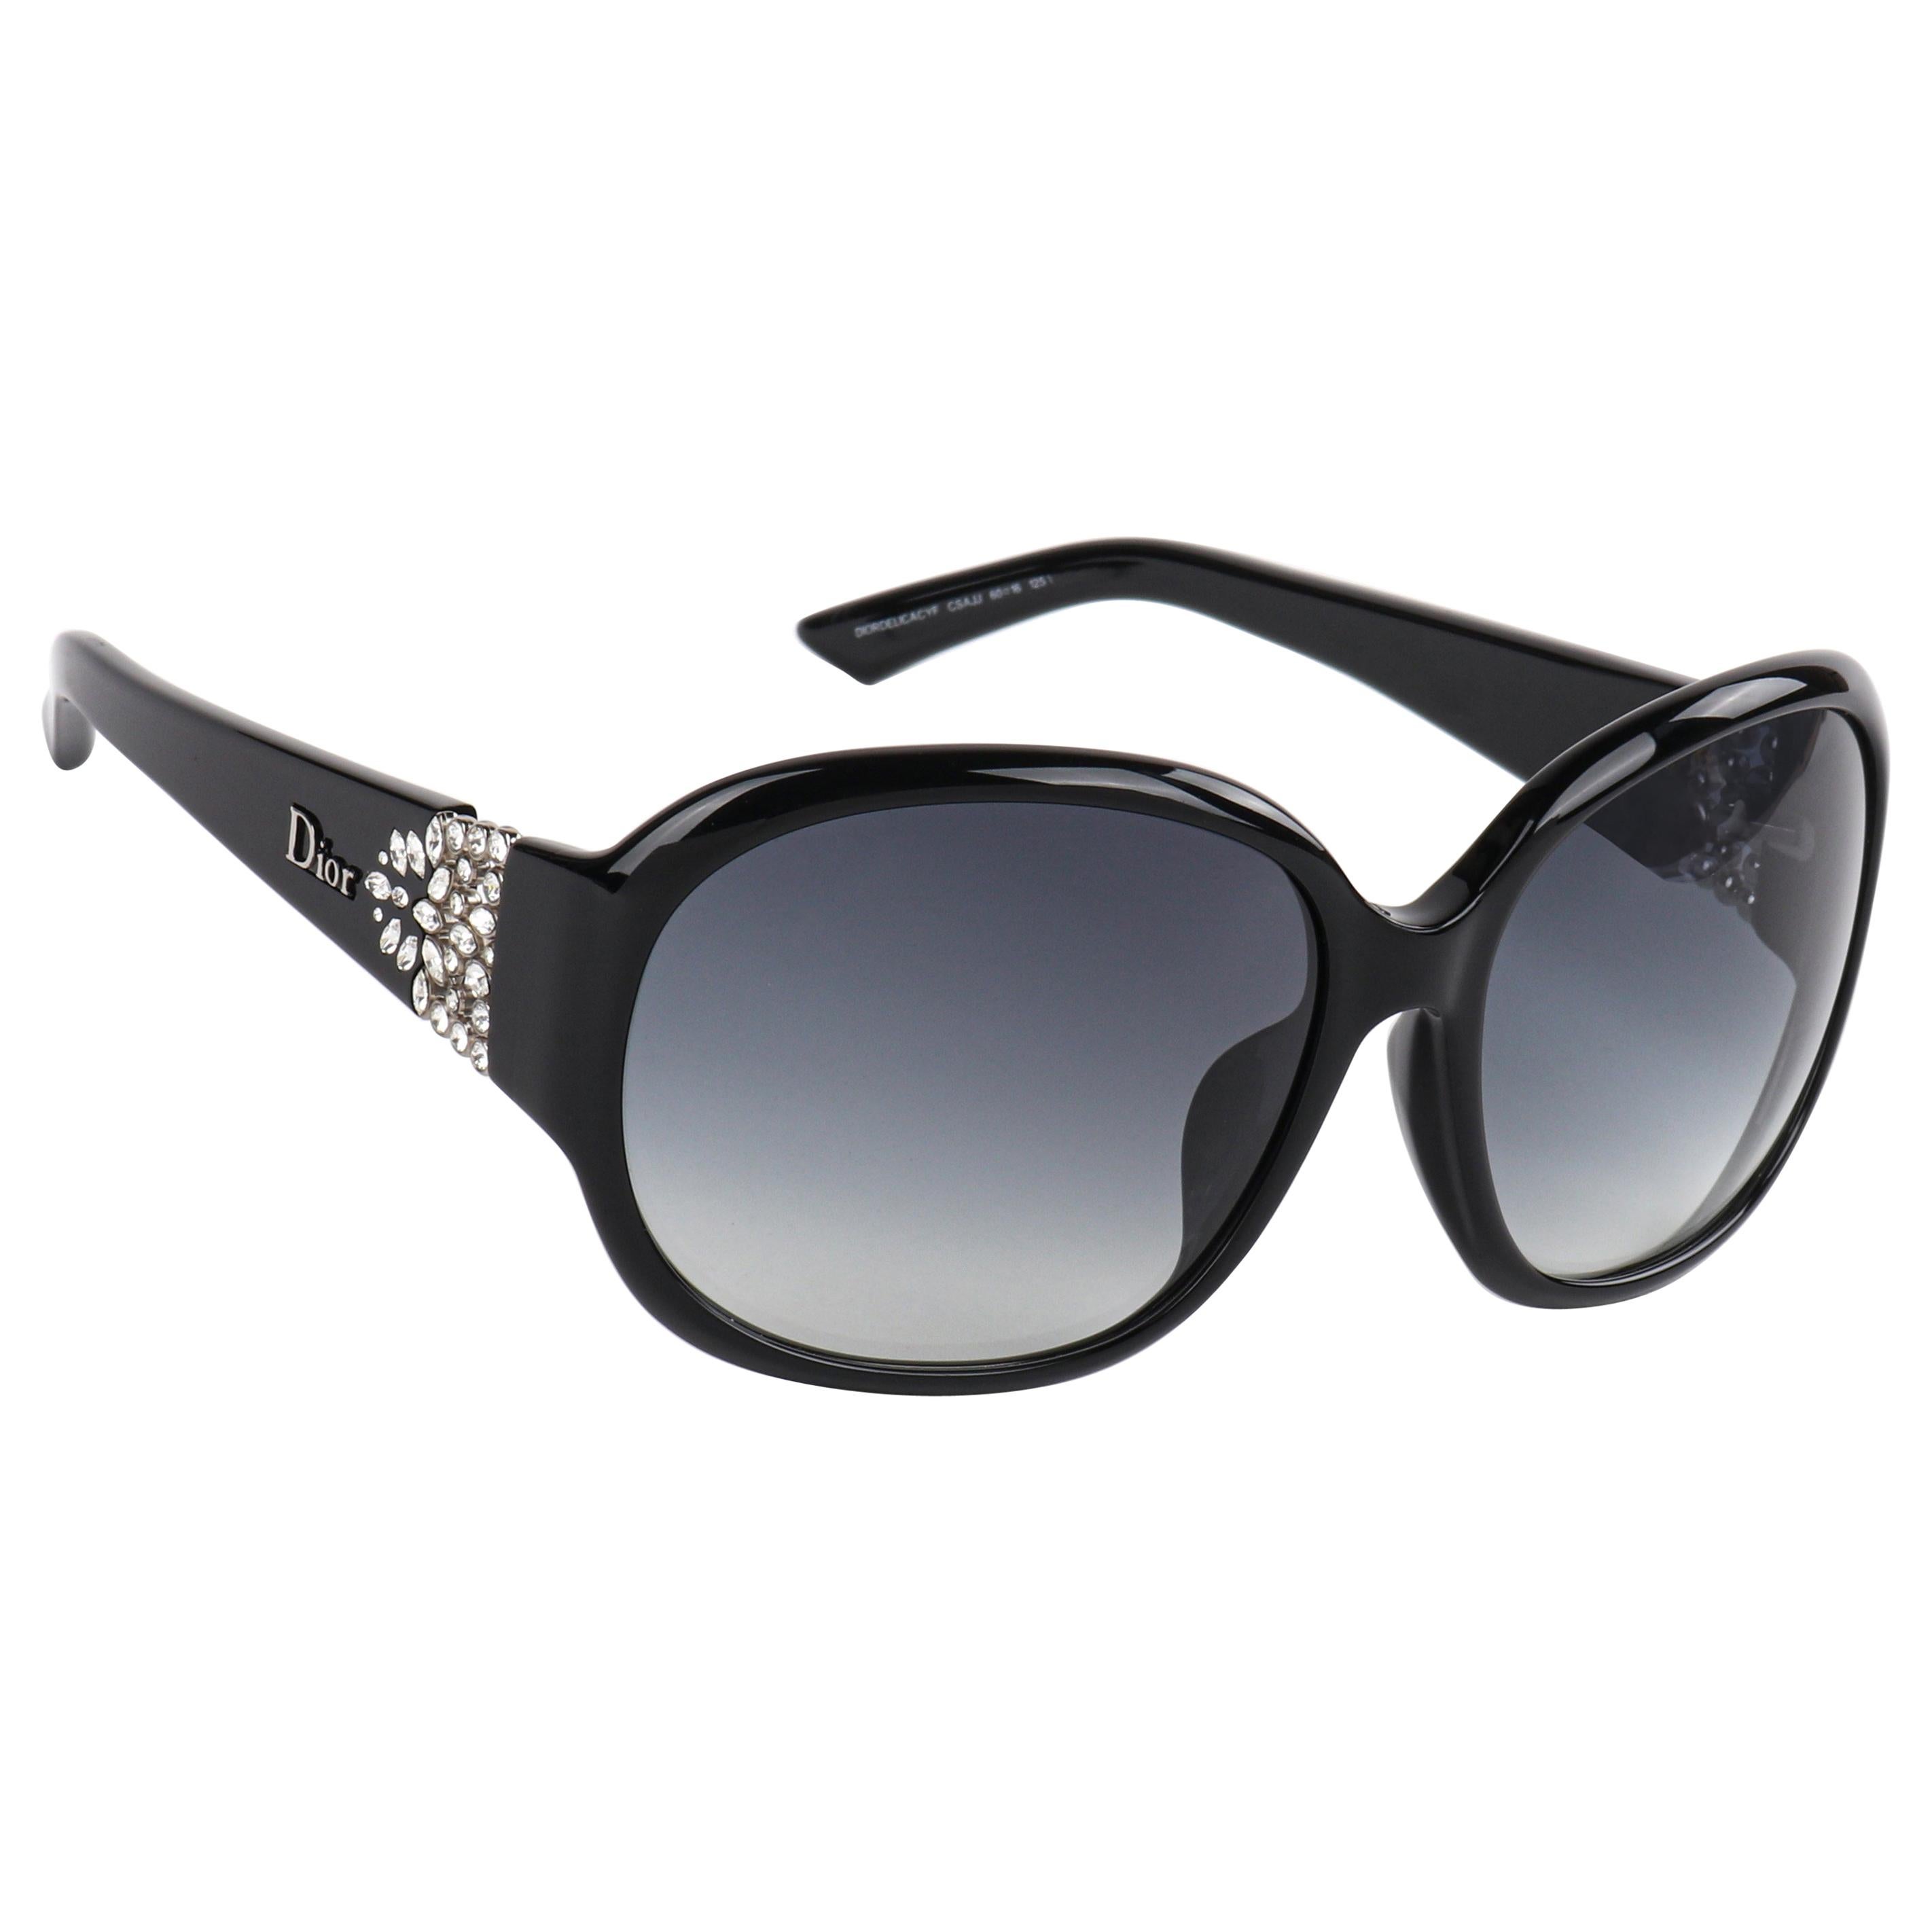 CHRISTIAN DIOR “Delicacy F” Ltd Ed. Black Swarovski Crystal Oversized Sunglasses For Sale